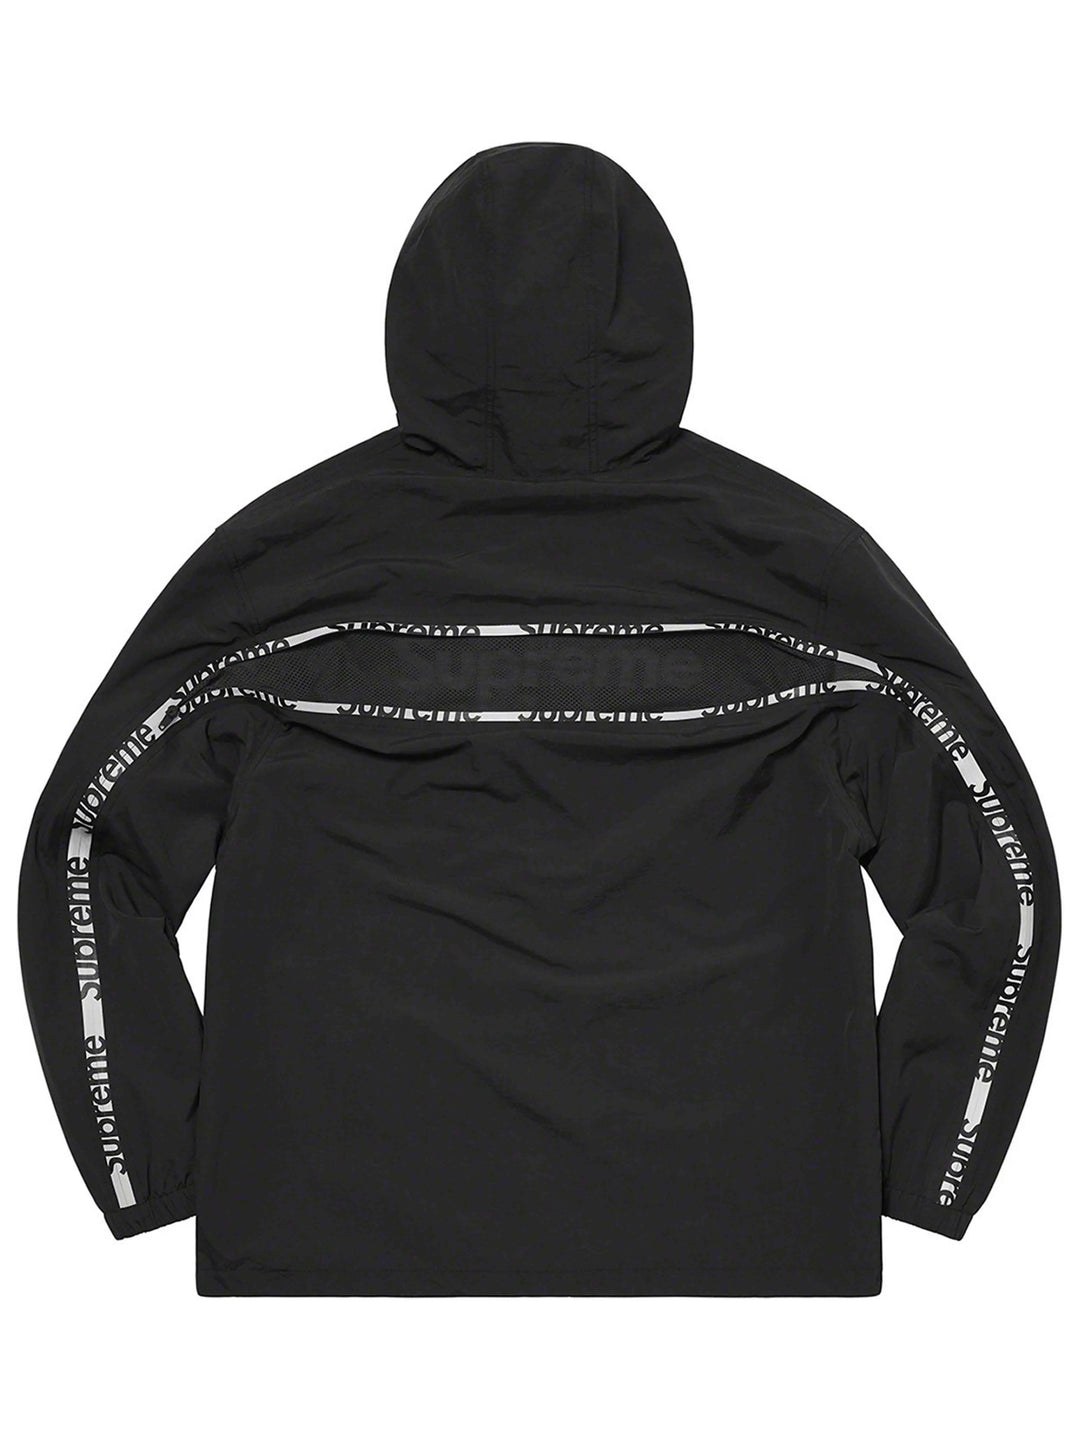 Supreme Reflective Zip Hooded Jacket Black [SS21] Prior